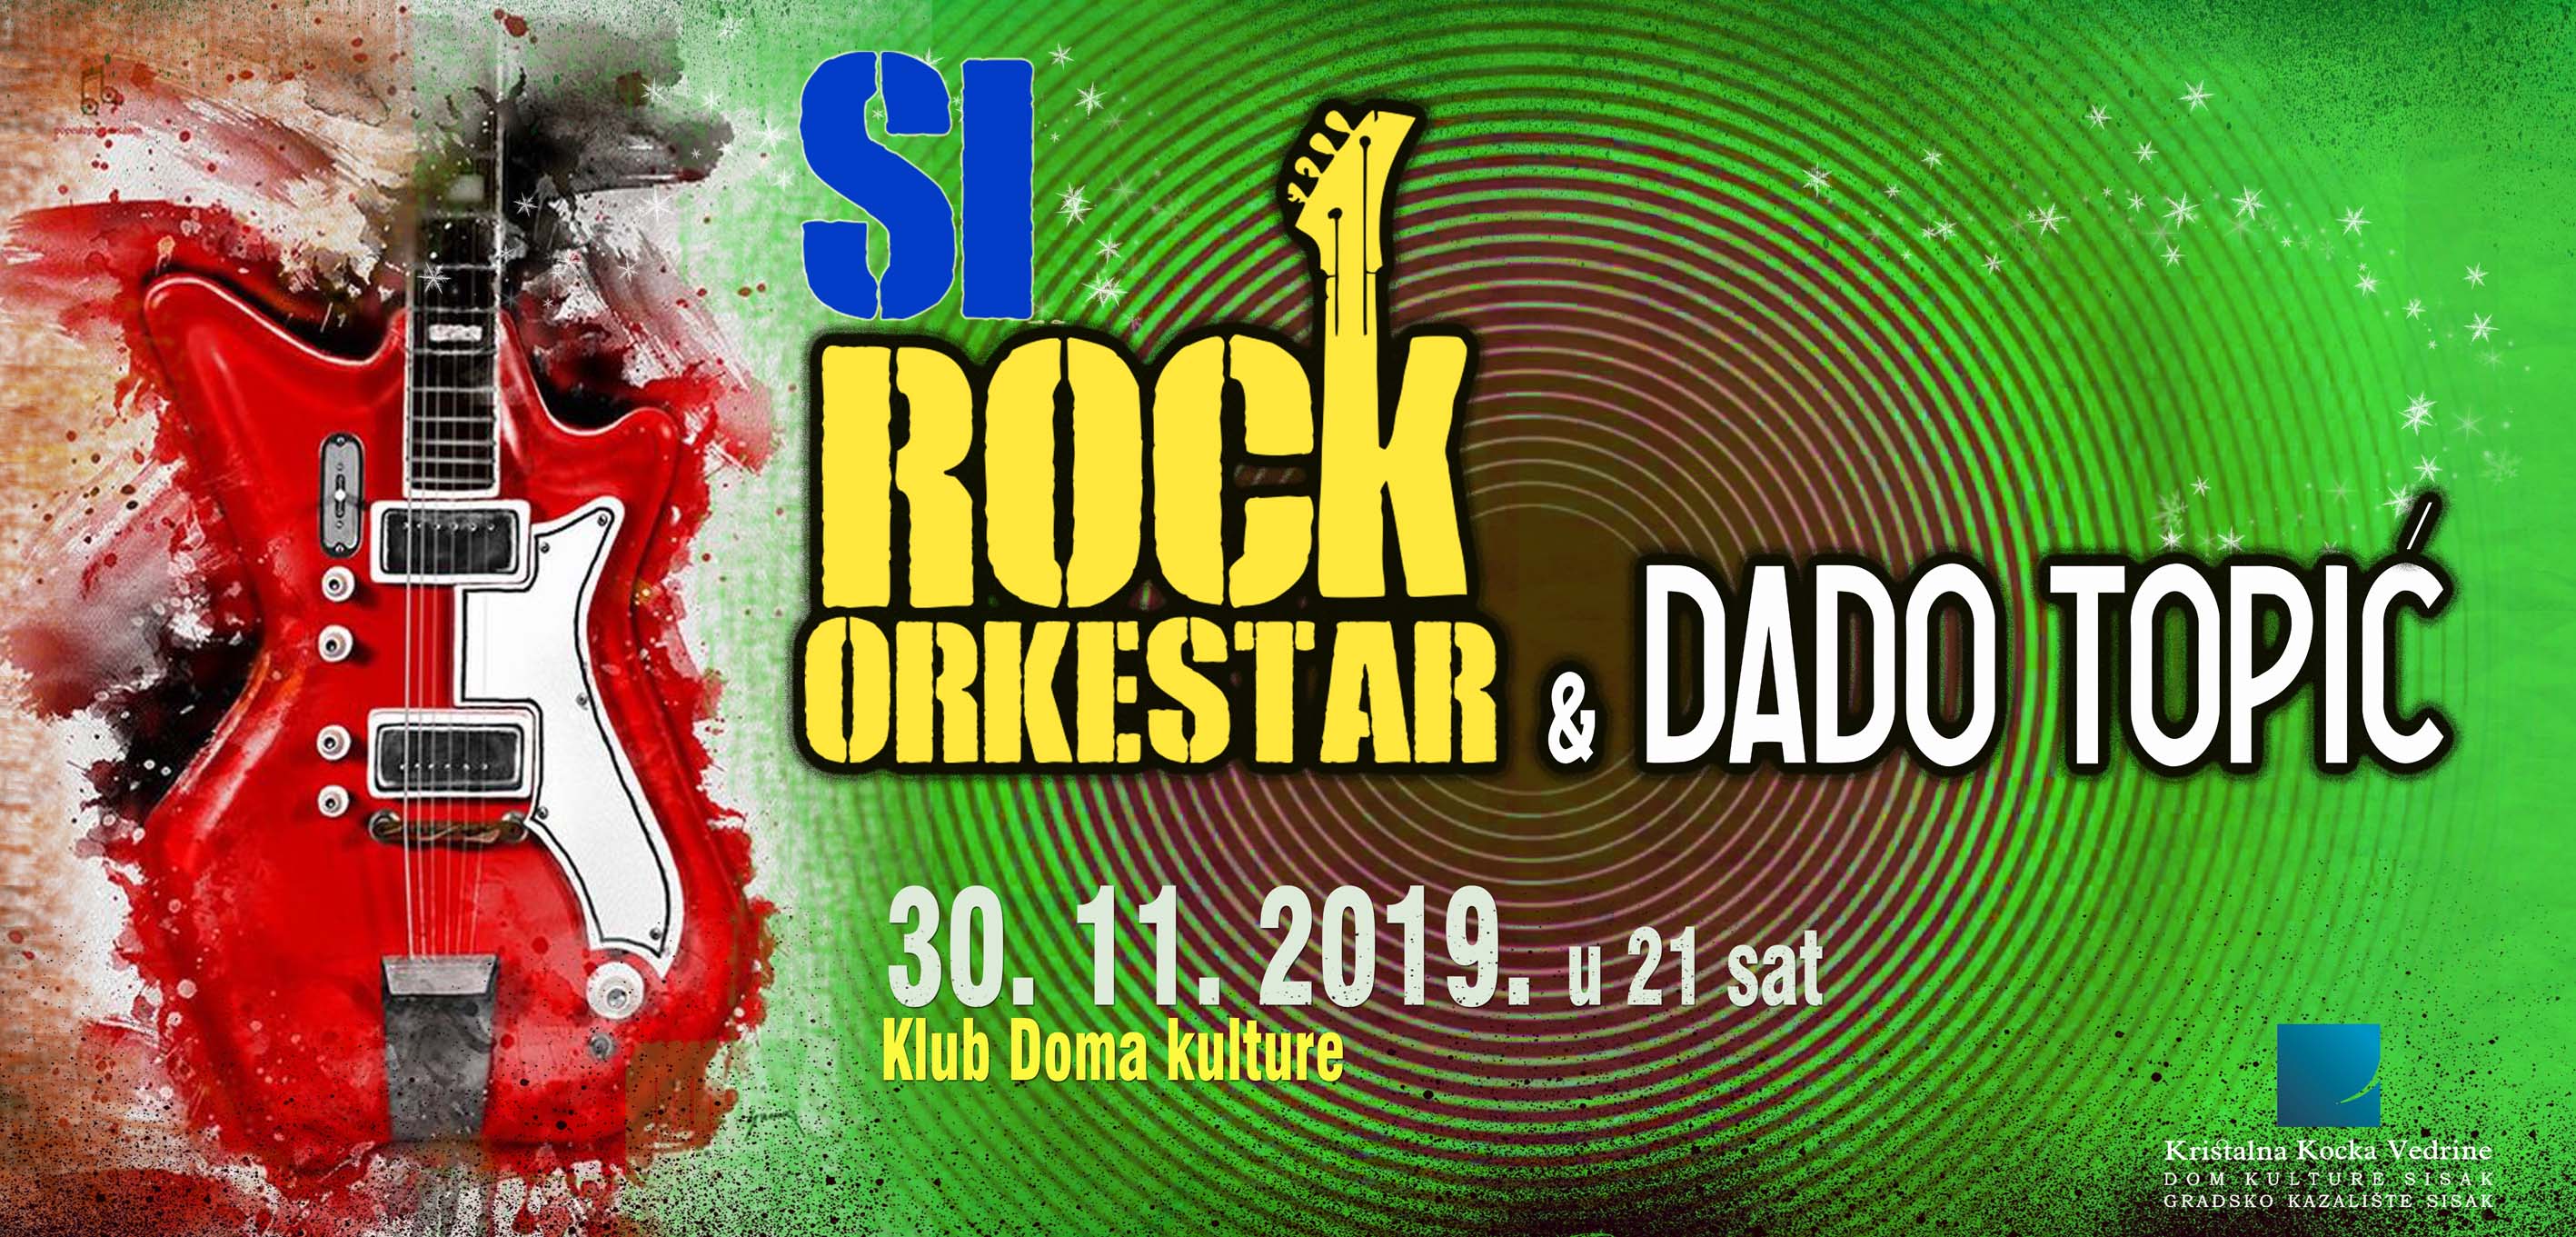 You are currently viewing Koncert SiRock orkestra i Dade Topića u Klubu Kristalne kocke vedrine